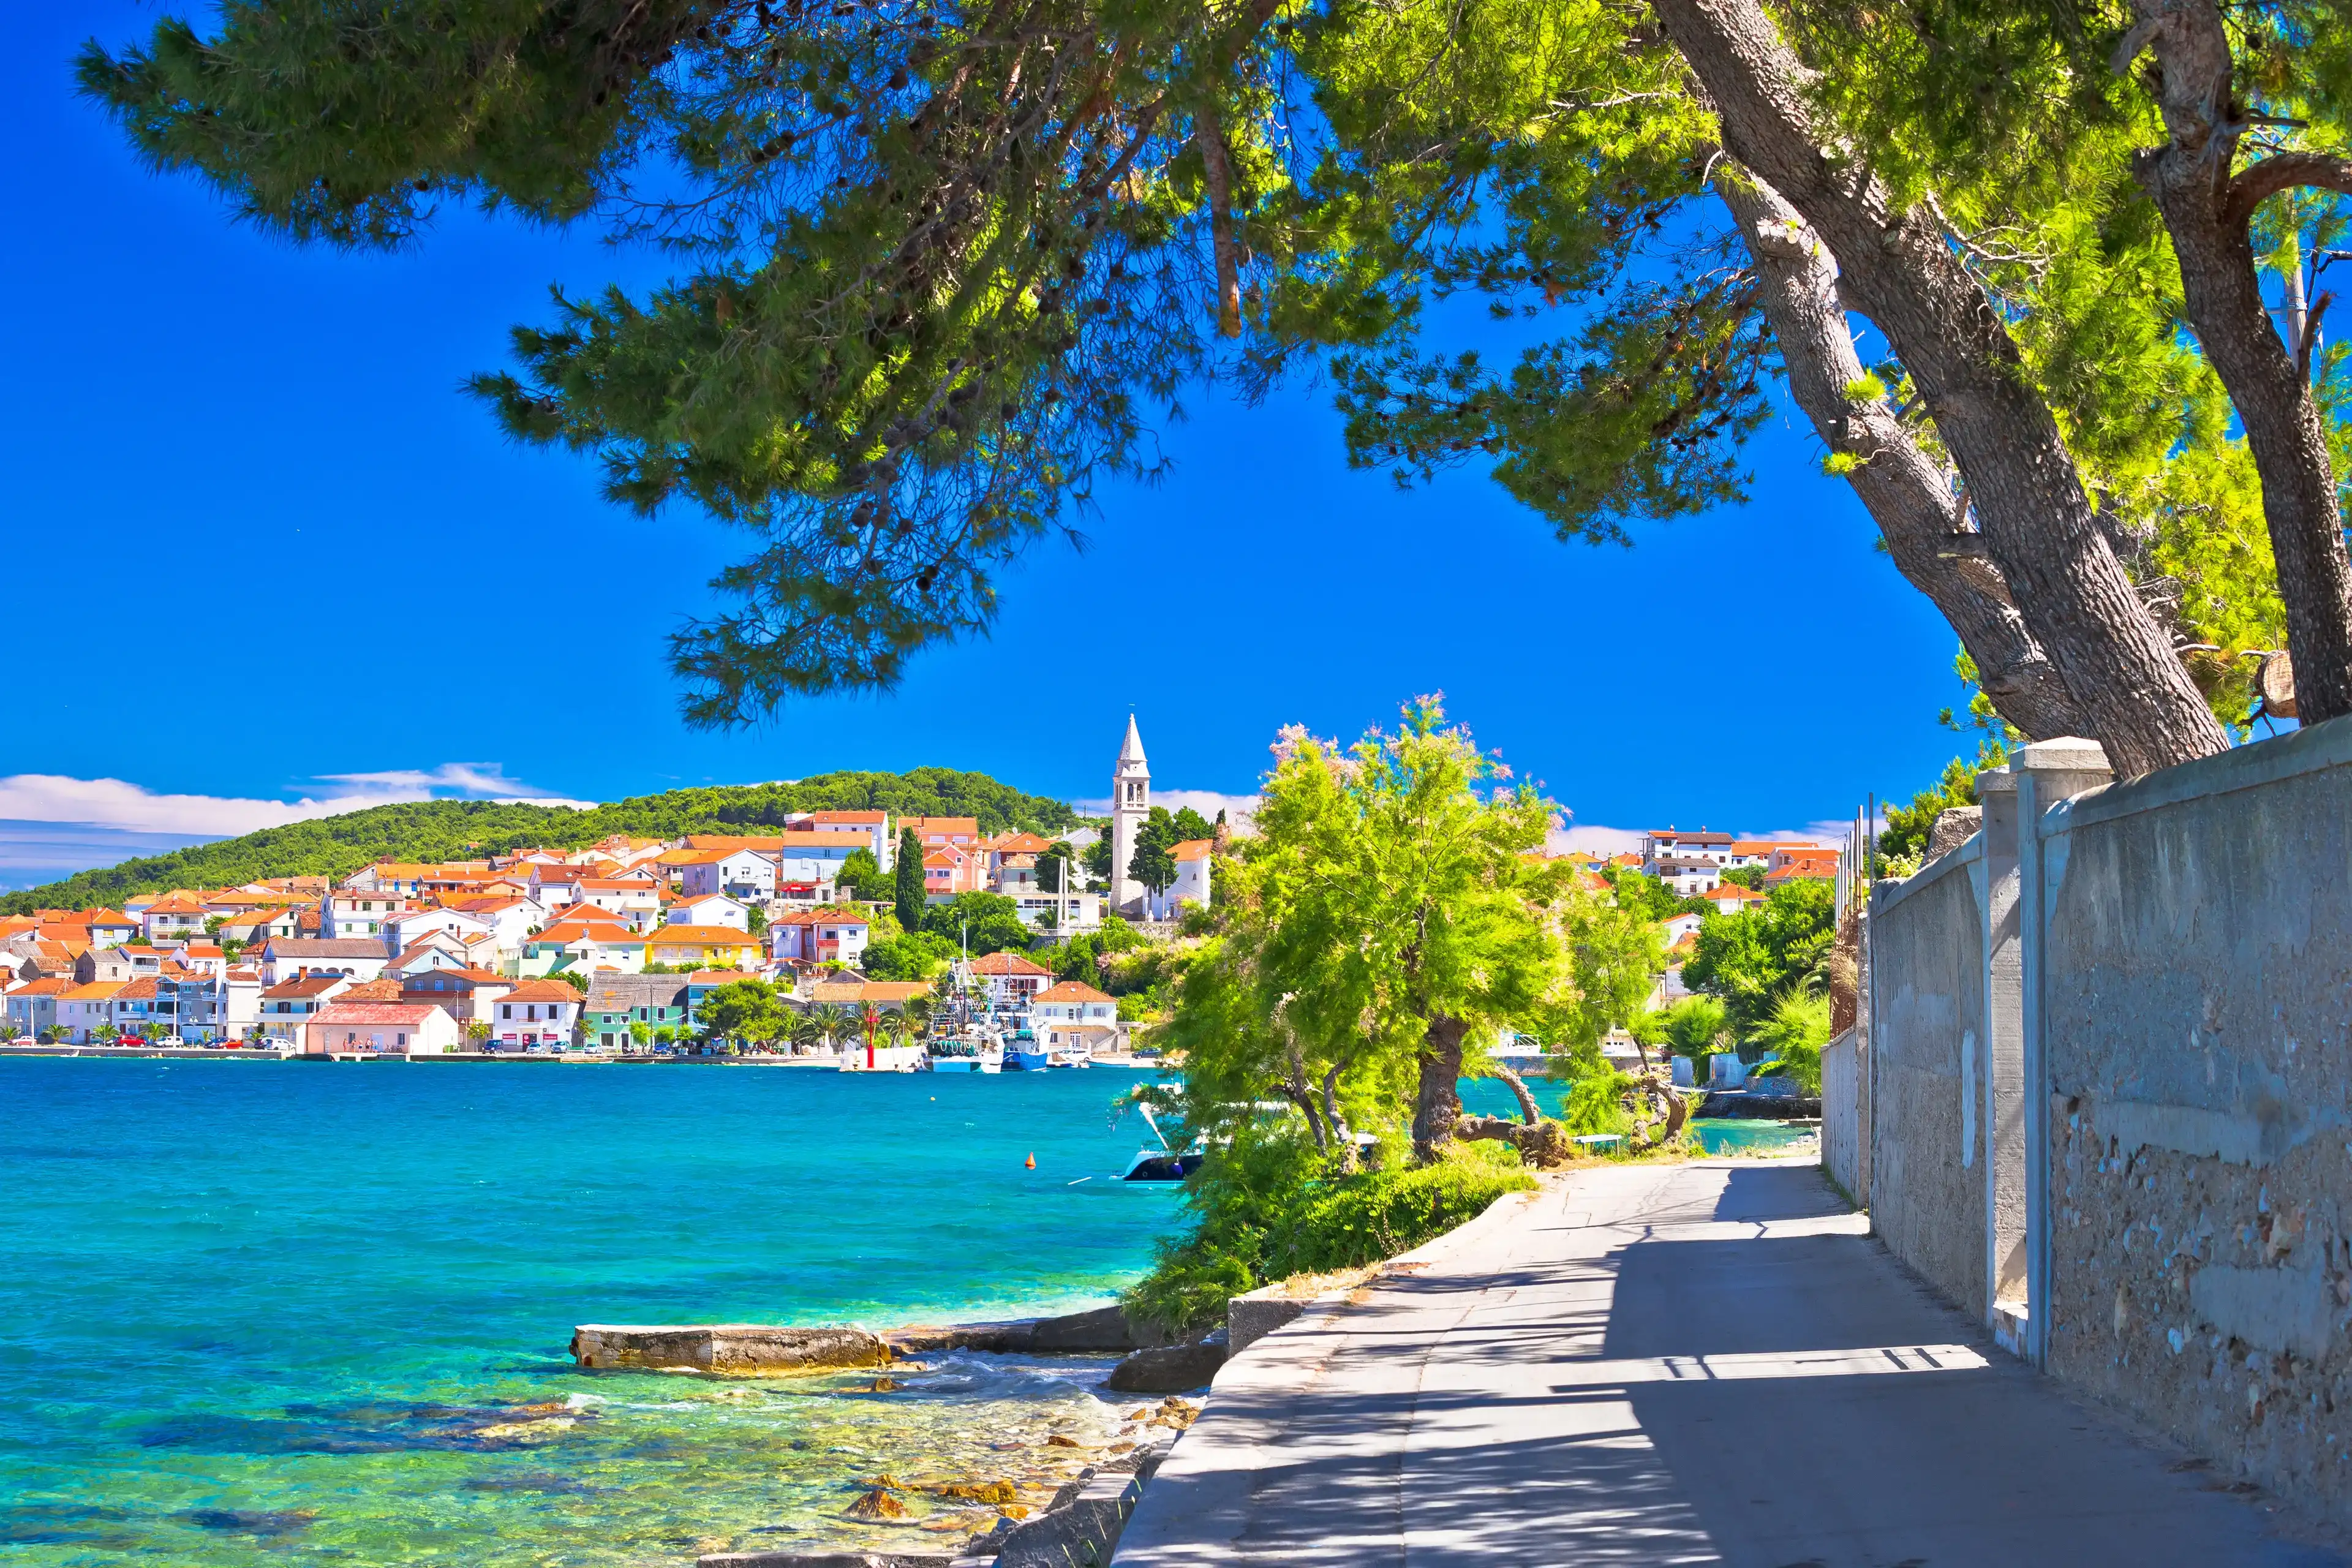 Zadar archipelago. Kali on Ugljan island turquoise sea and walkway view, Dalmatia region of Croatia 